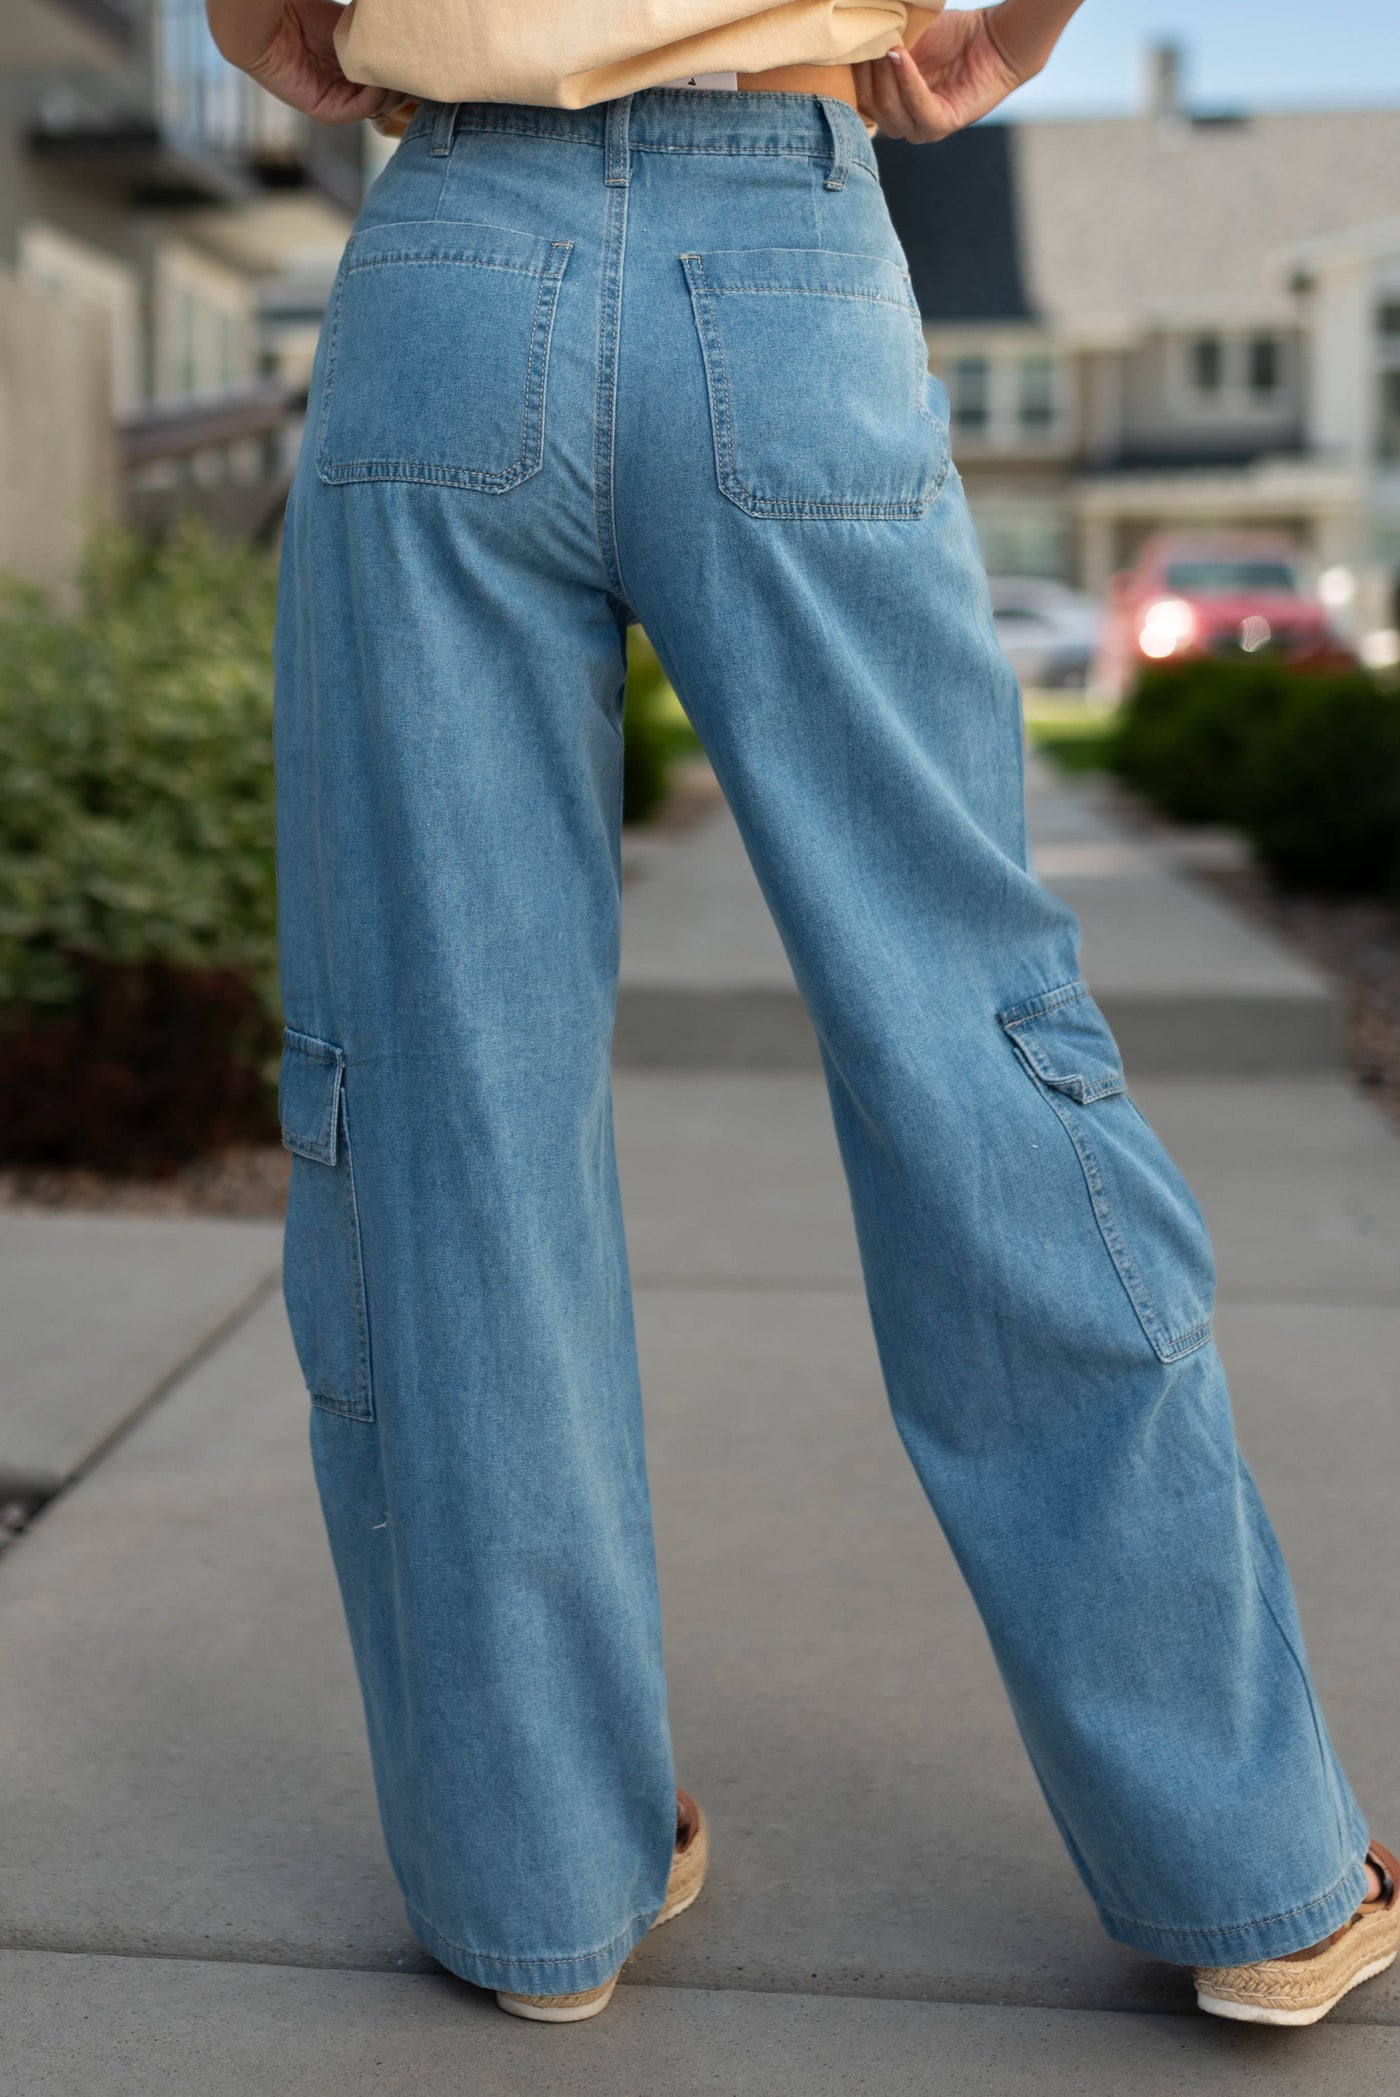 Back view of denim blue pants